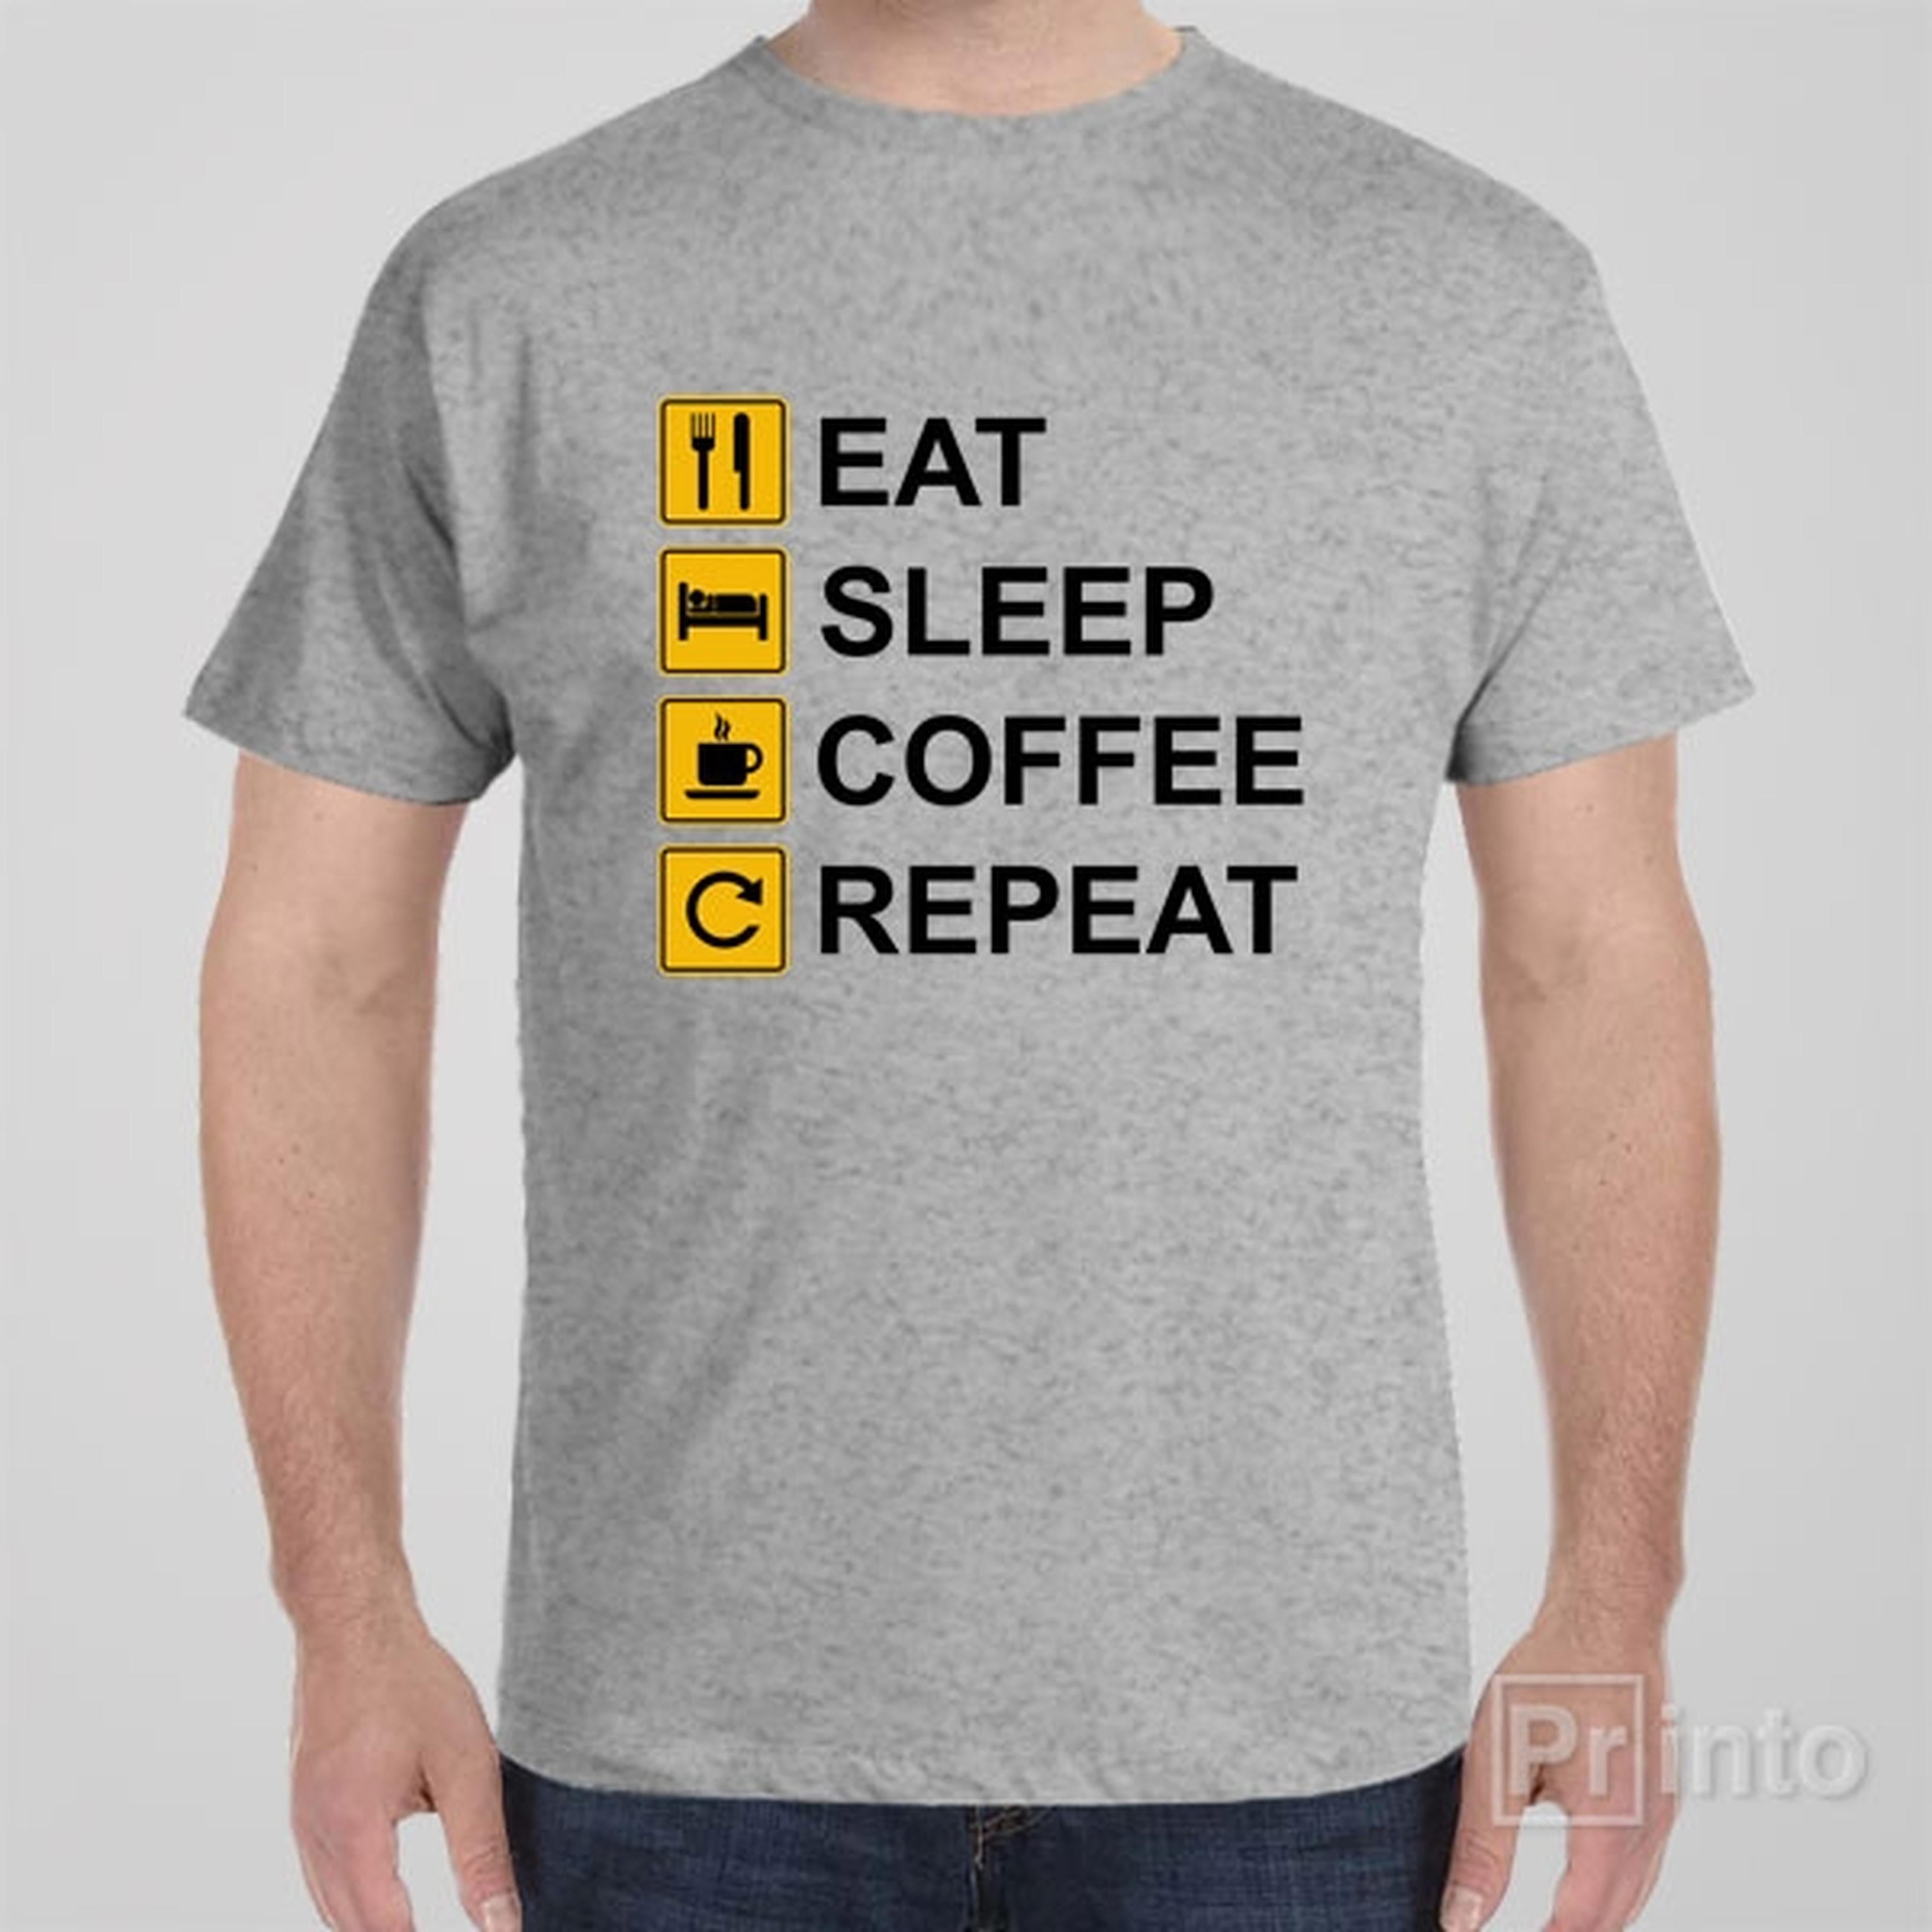 eat-sleep-coffee-repeat-t-shirt